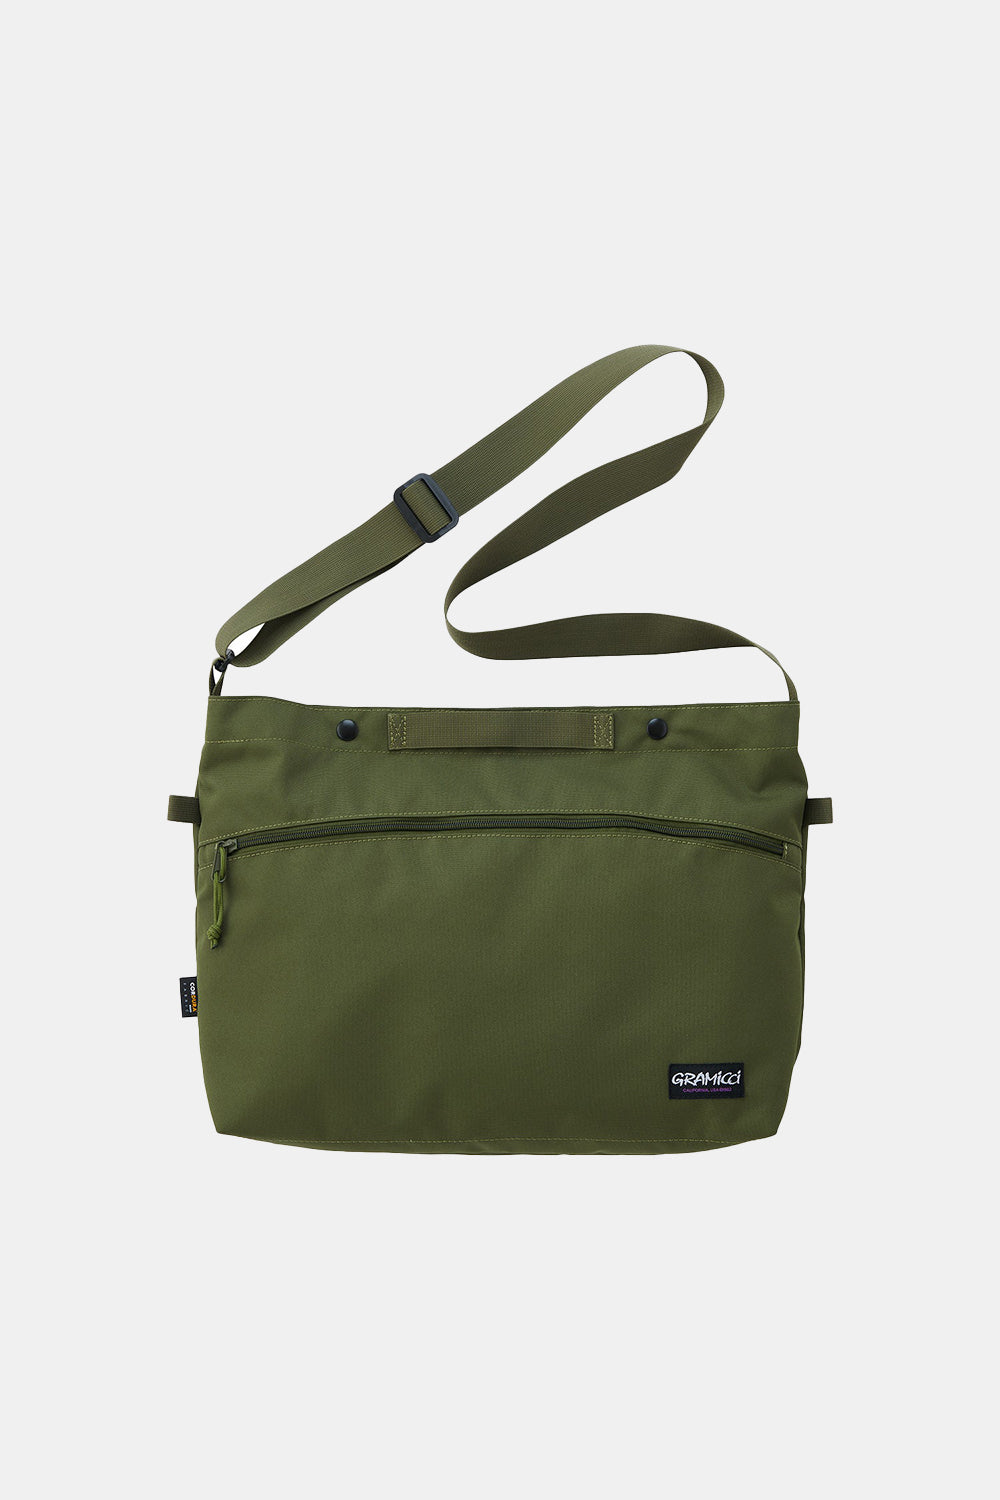 Gramicci Cordura Carrier Bag (Olive Drab)